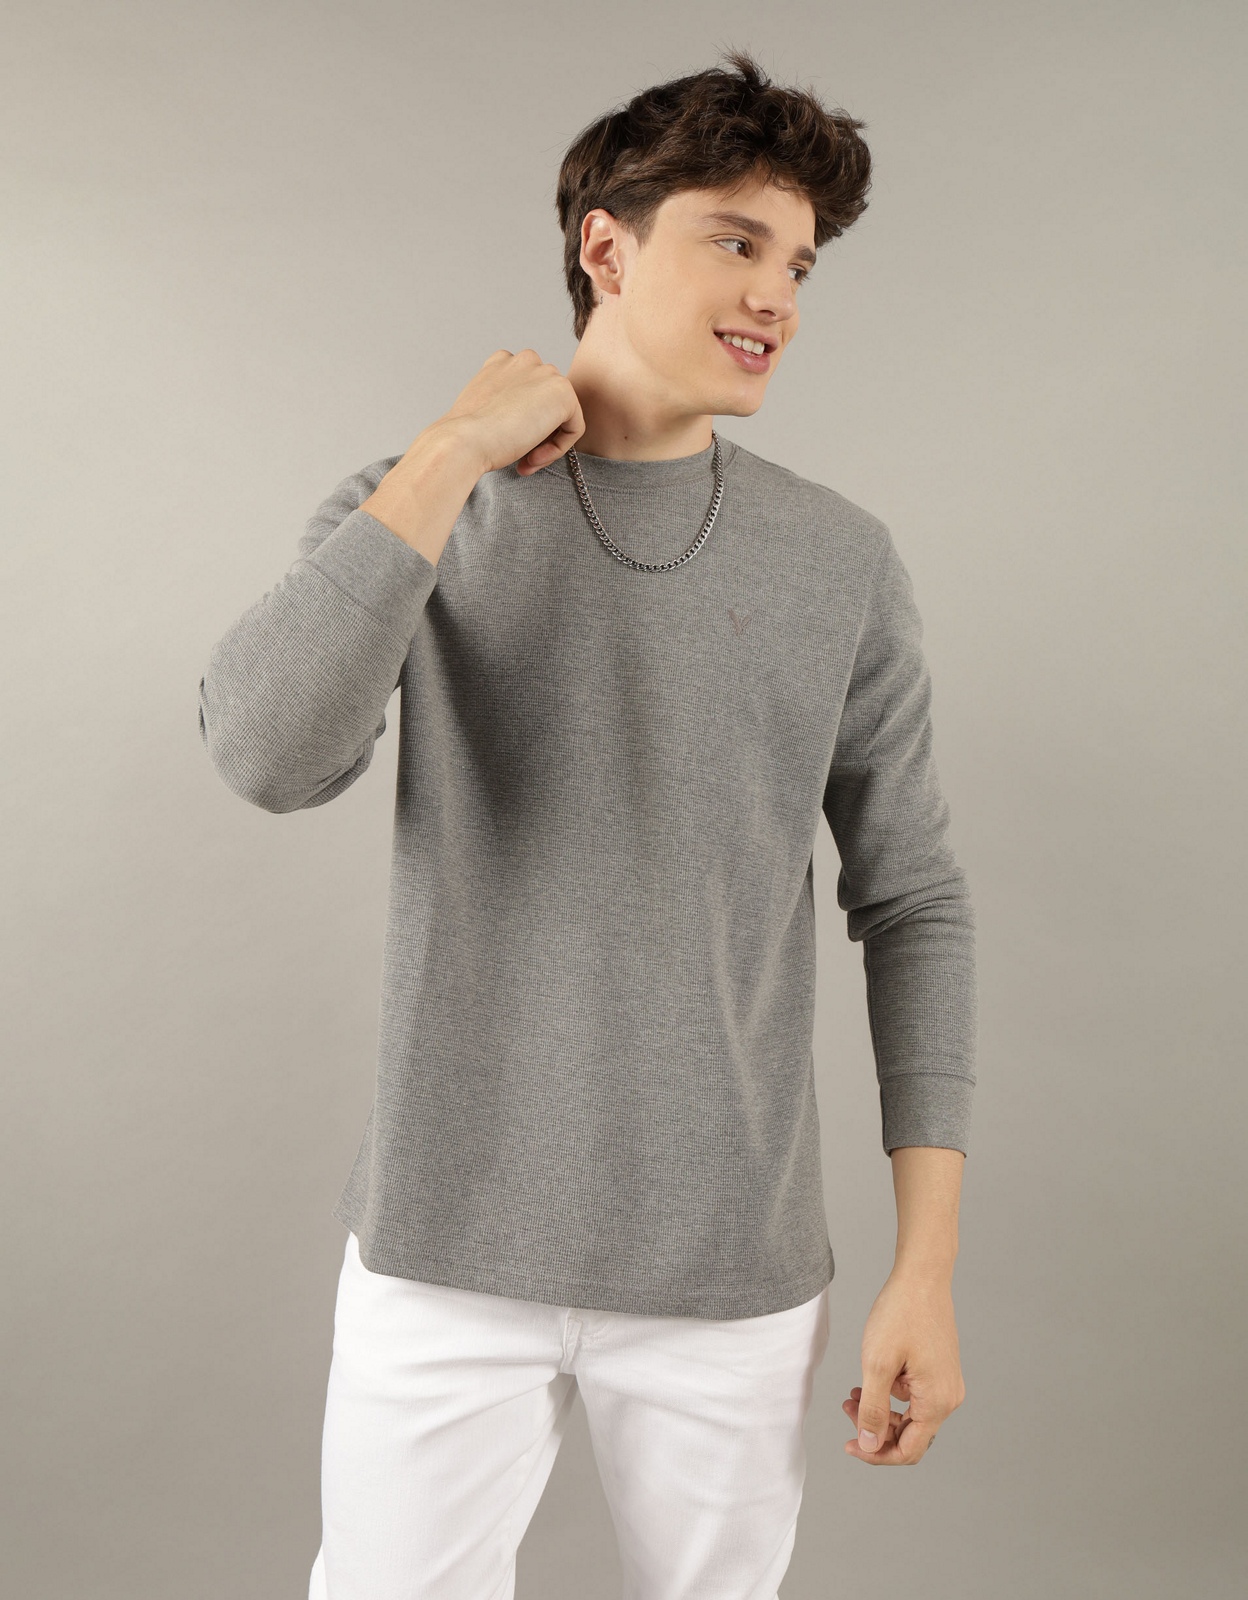 Mens Long Sleeve Thermal T Shirts Outlet | bellvalefarms.com